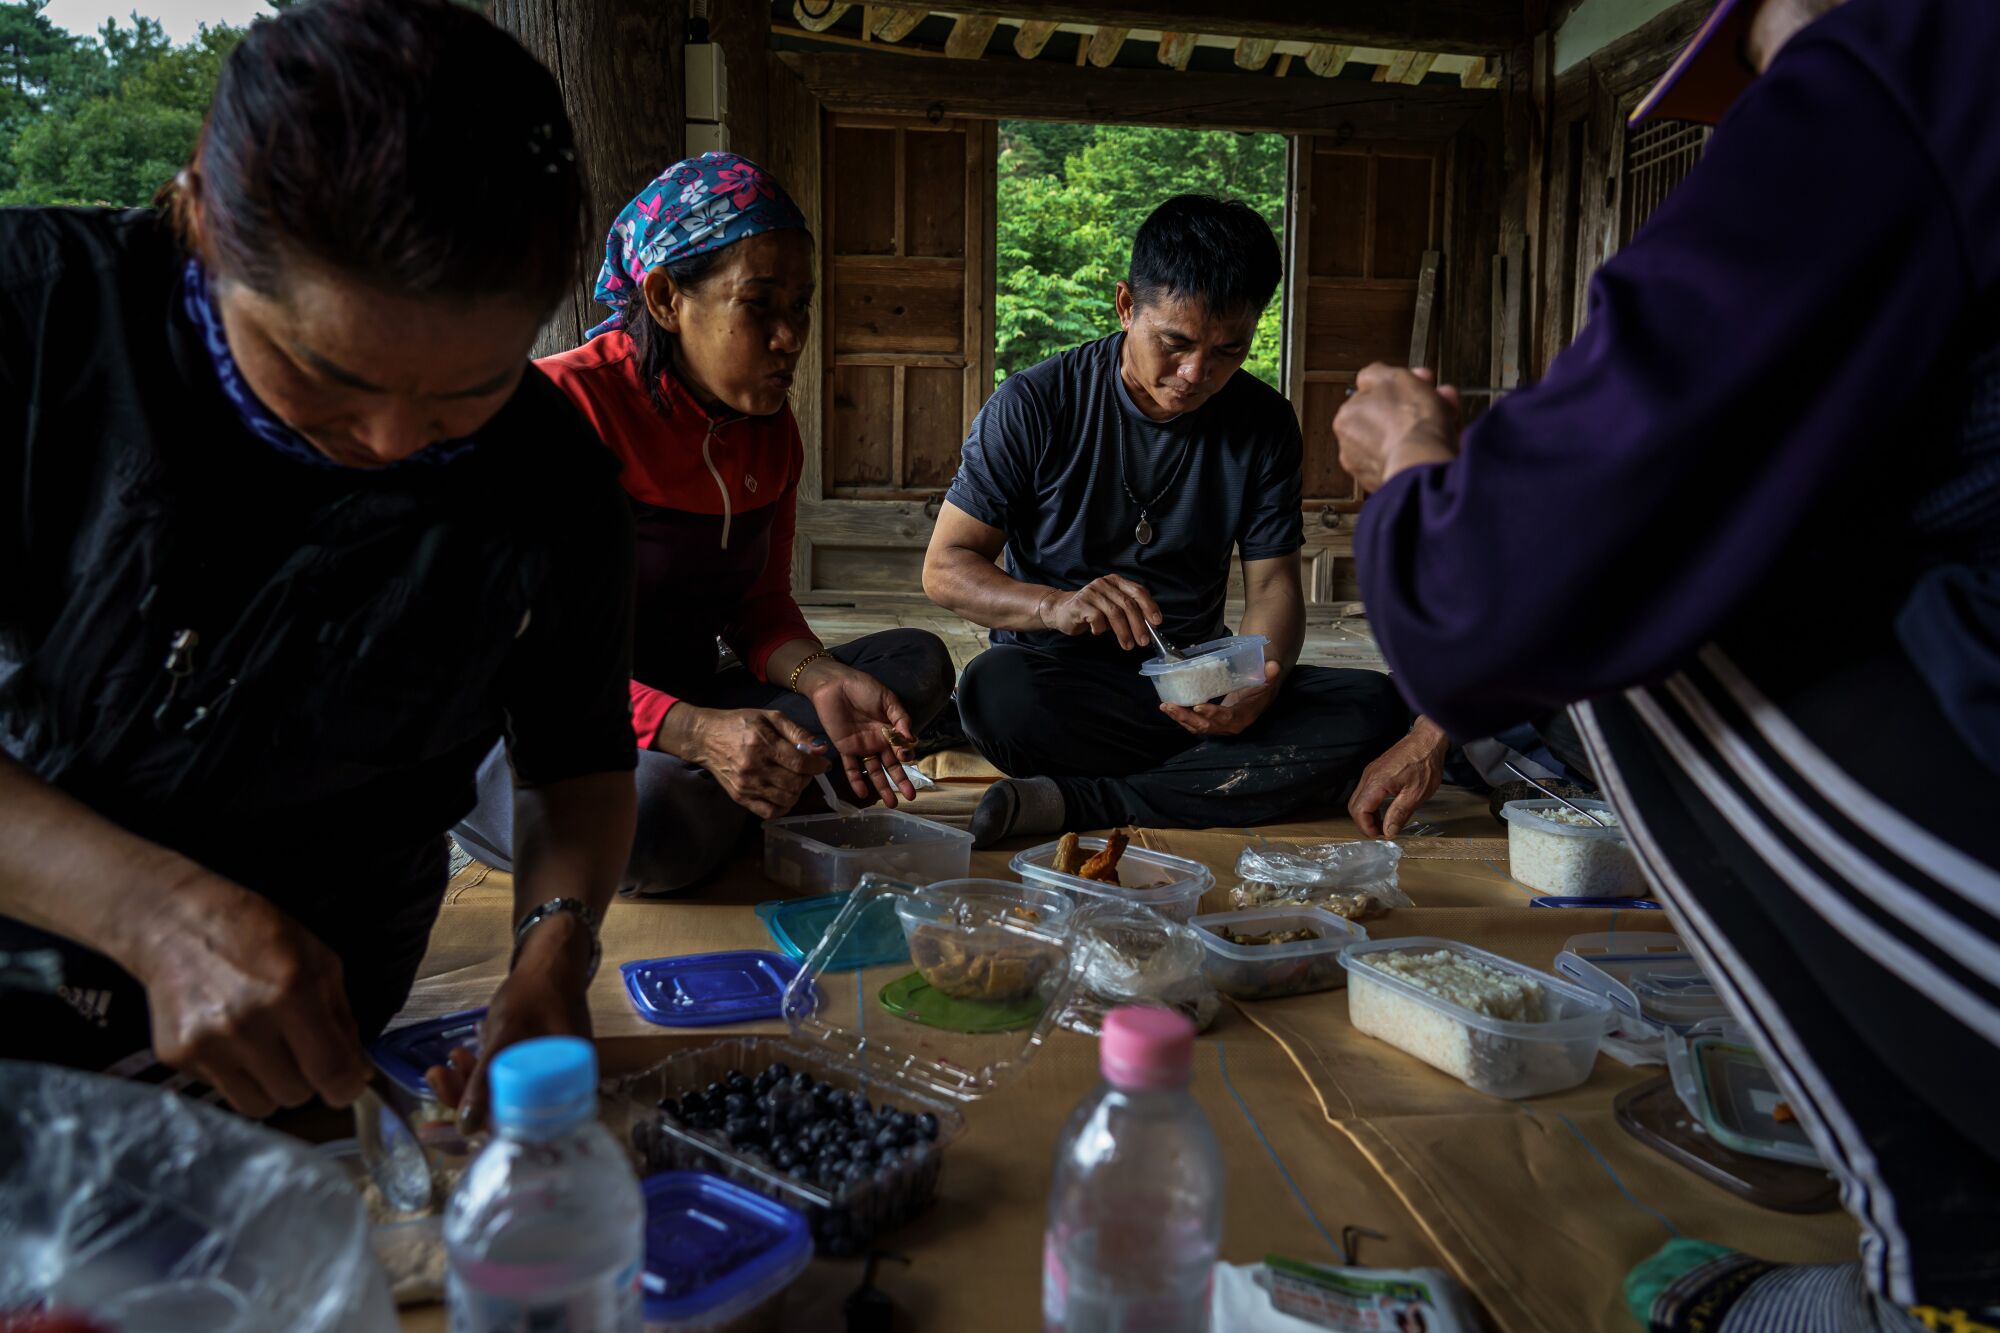 Promdeth Phonsrikaew, center, eats breakfast during a 15-minute break on a tobacco farm.